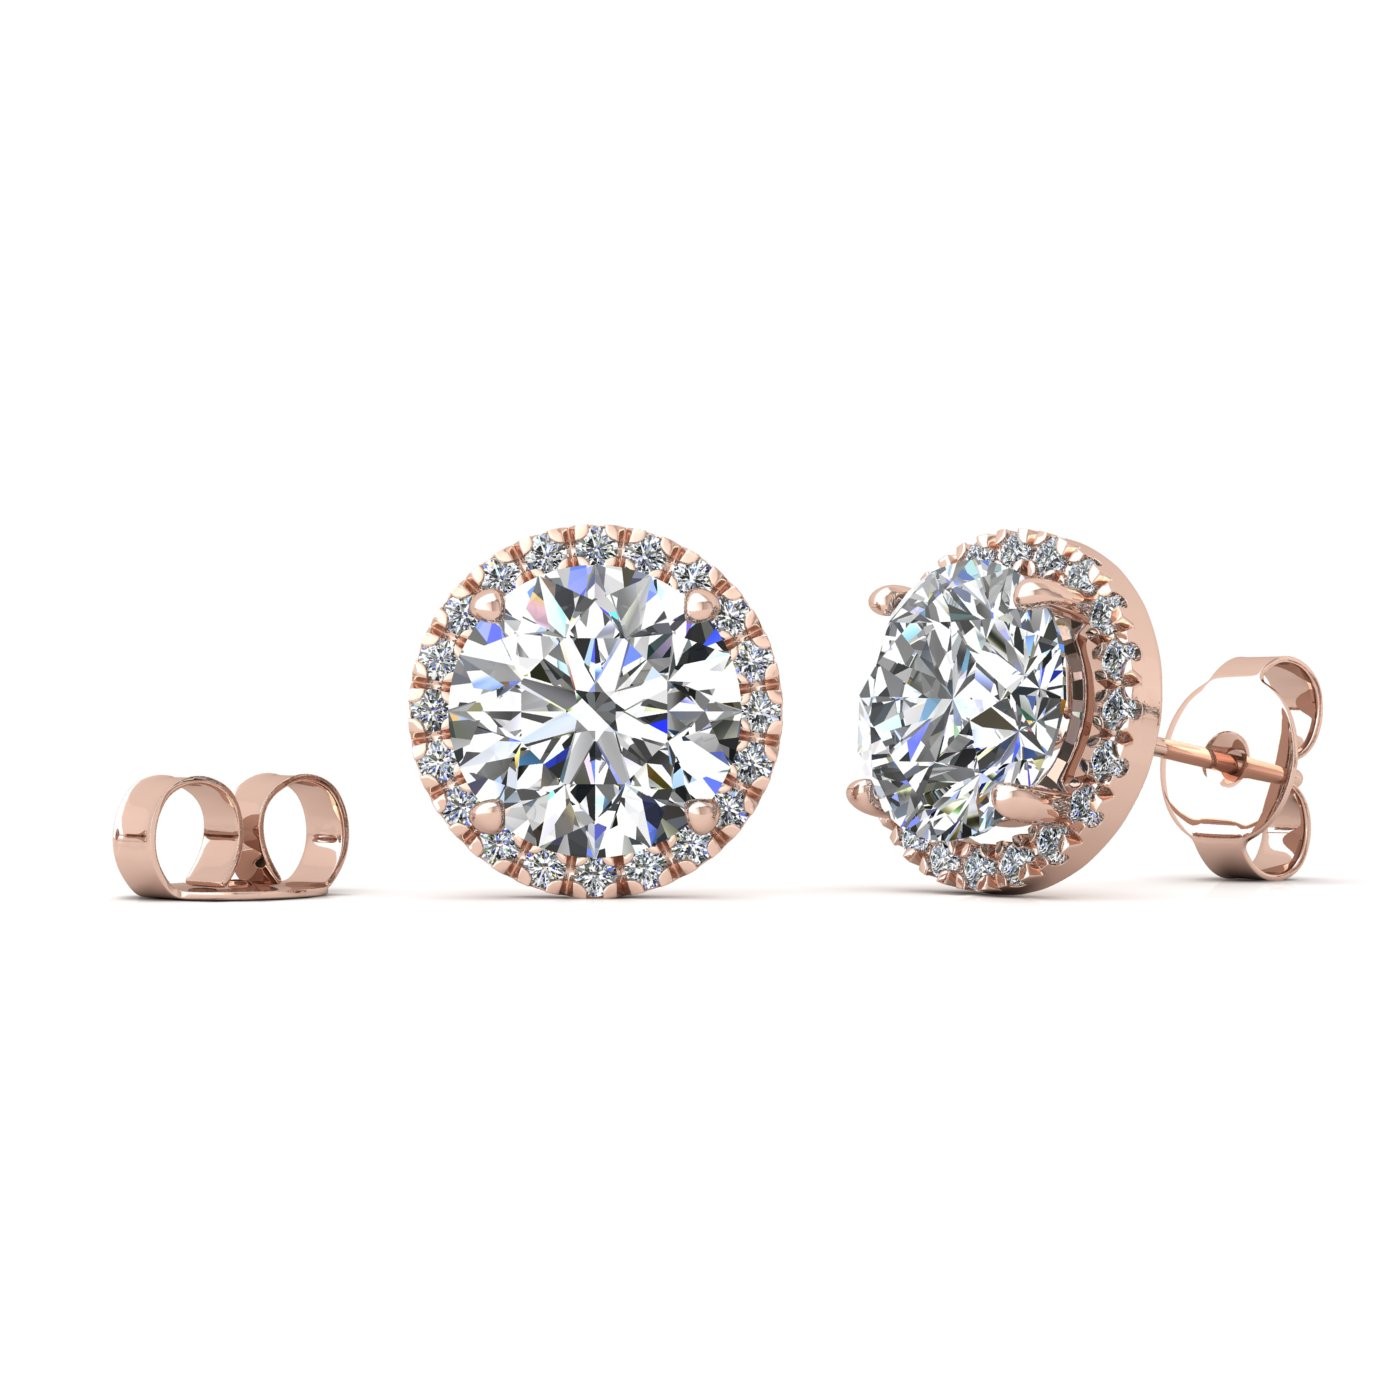 18k white gold 1 ct each (2,0 tcw) 4 prongs round shape diamond earrings with diamond pavÉ set halo Photos & images